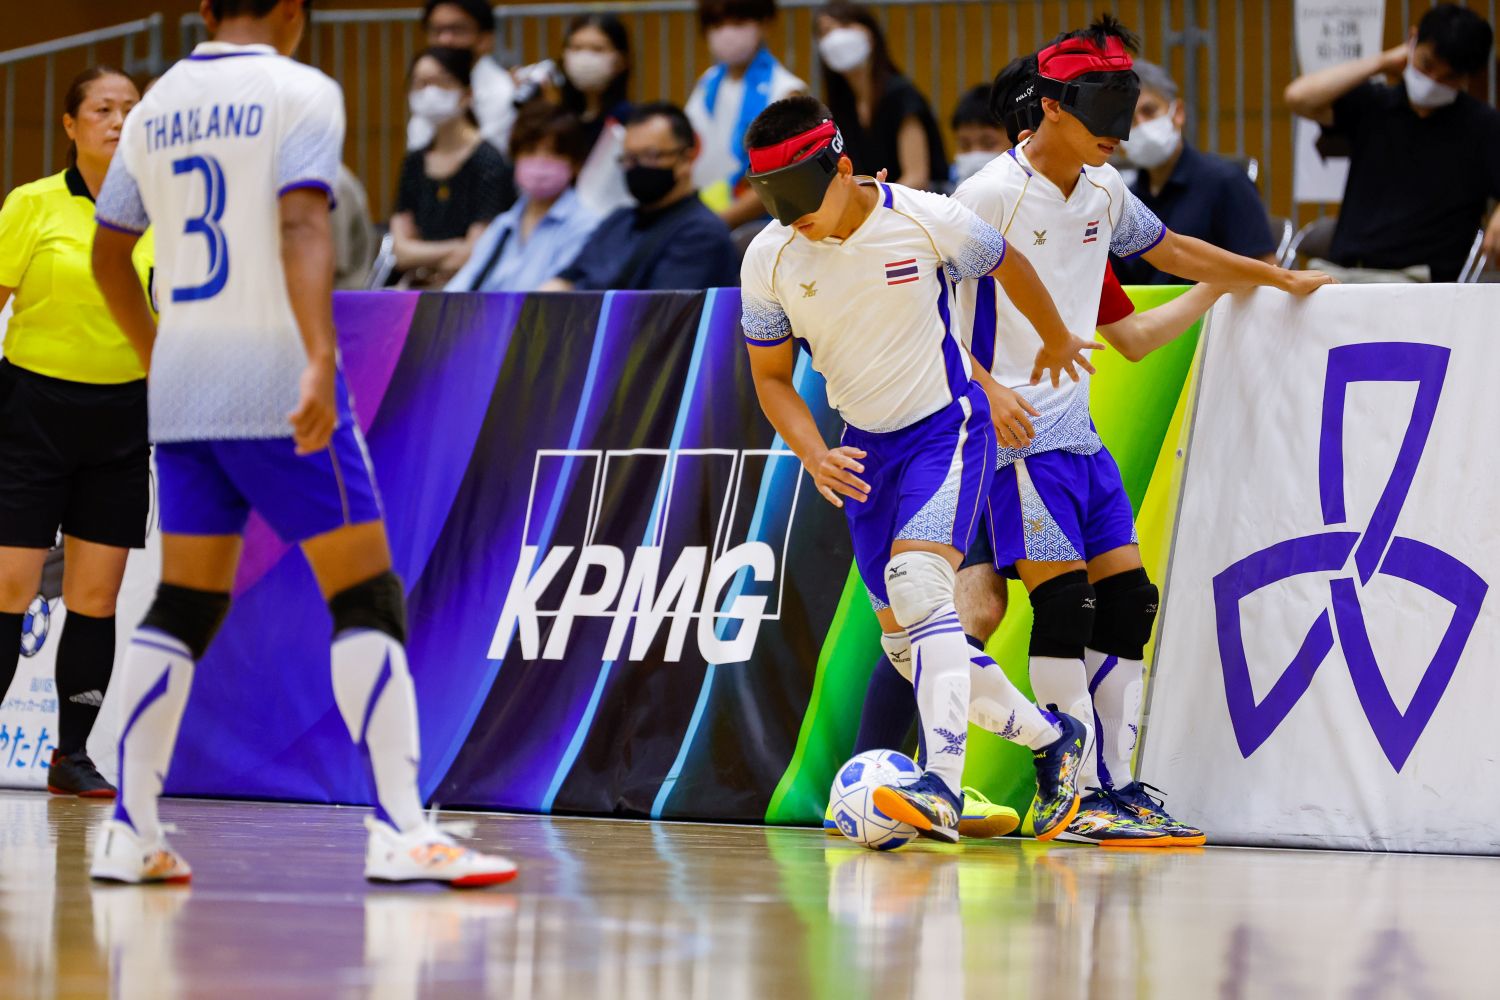 「LIGA.i ブラインドサッカートップリーグ」 KPMGジャパンが、3年間の節冠スポンサー契約締結 〜IDE共創パートナーとして、大会価値可視化の取り組みも開始〜_2